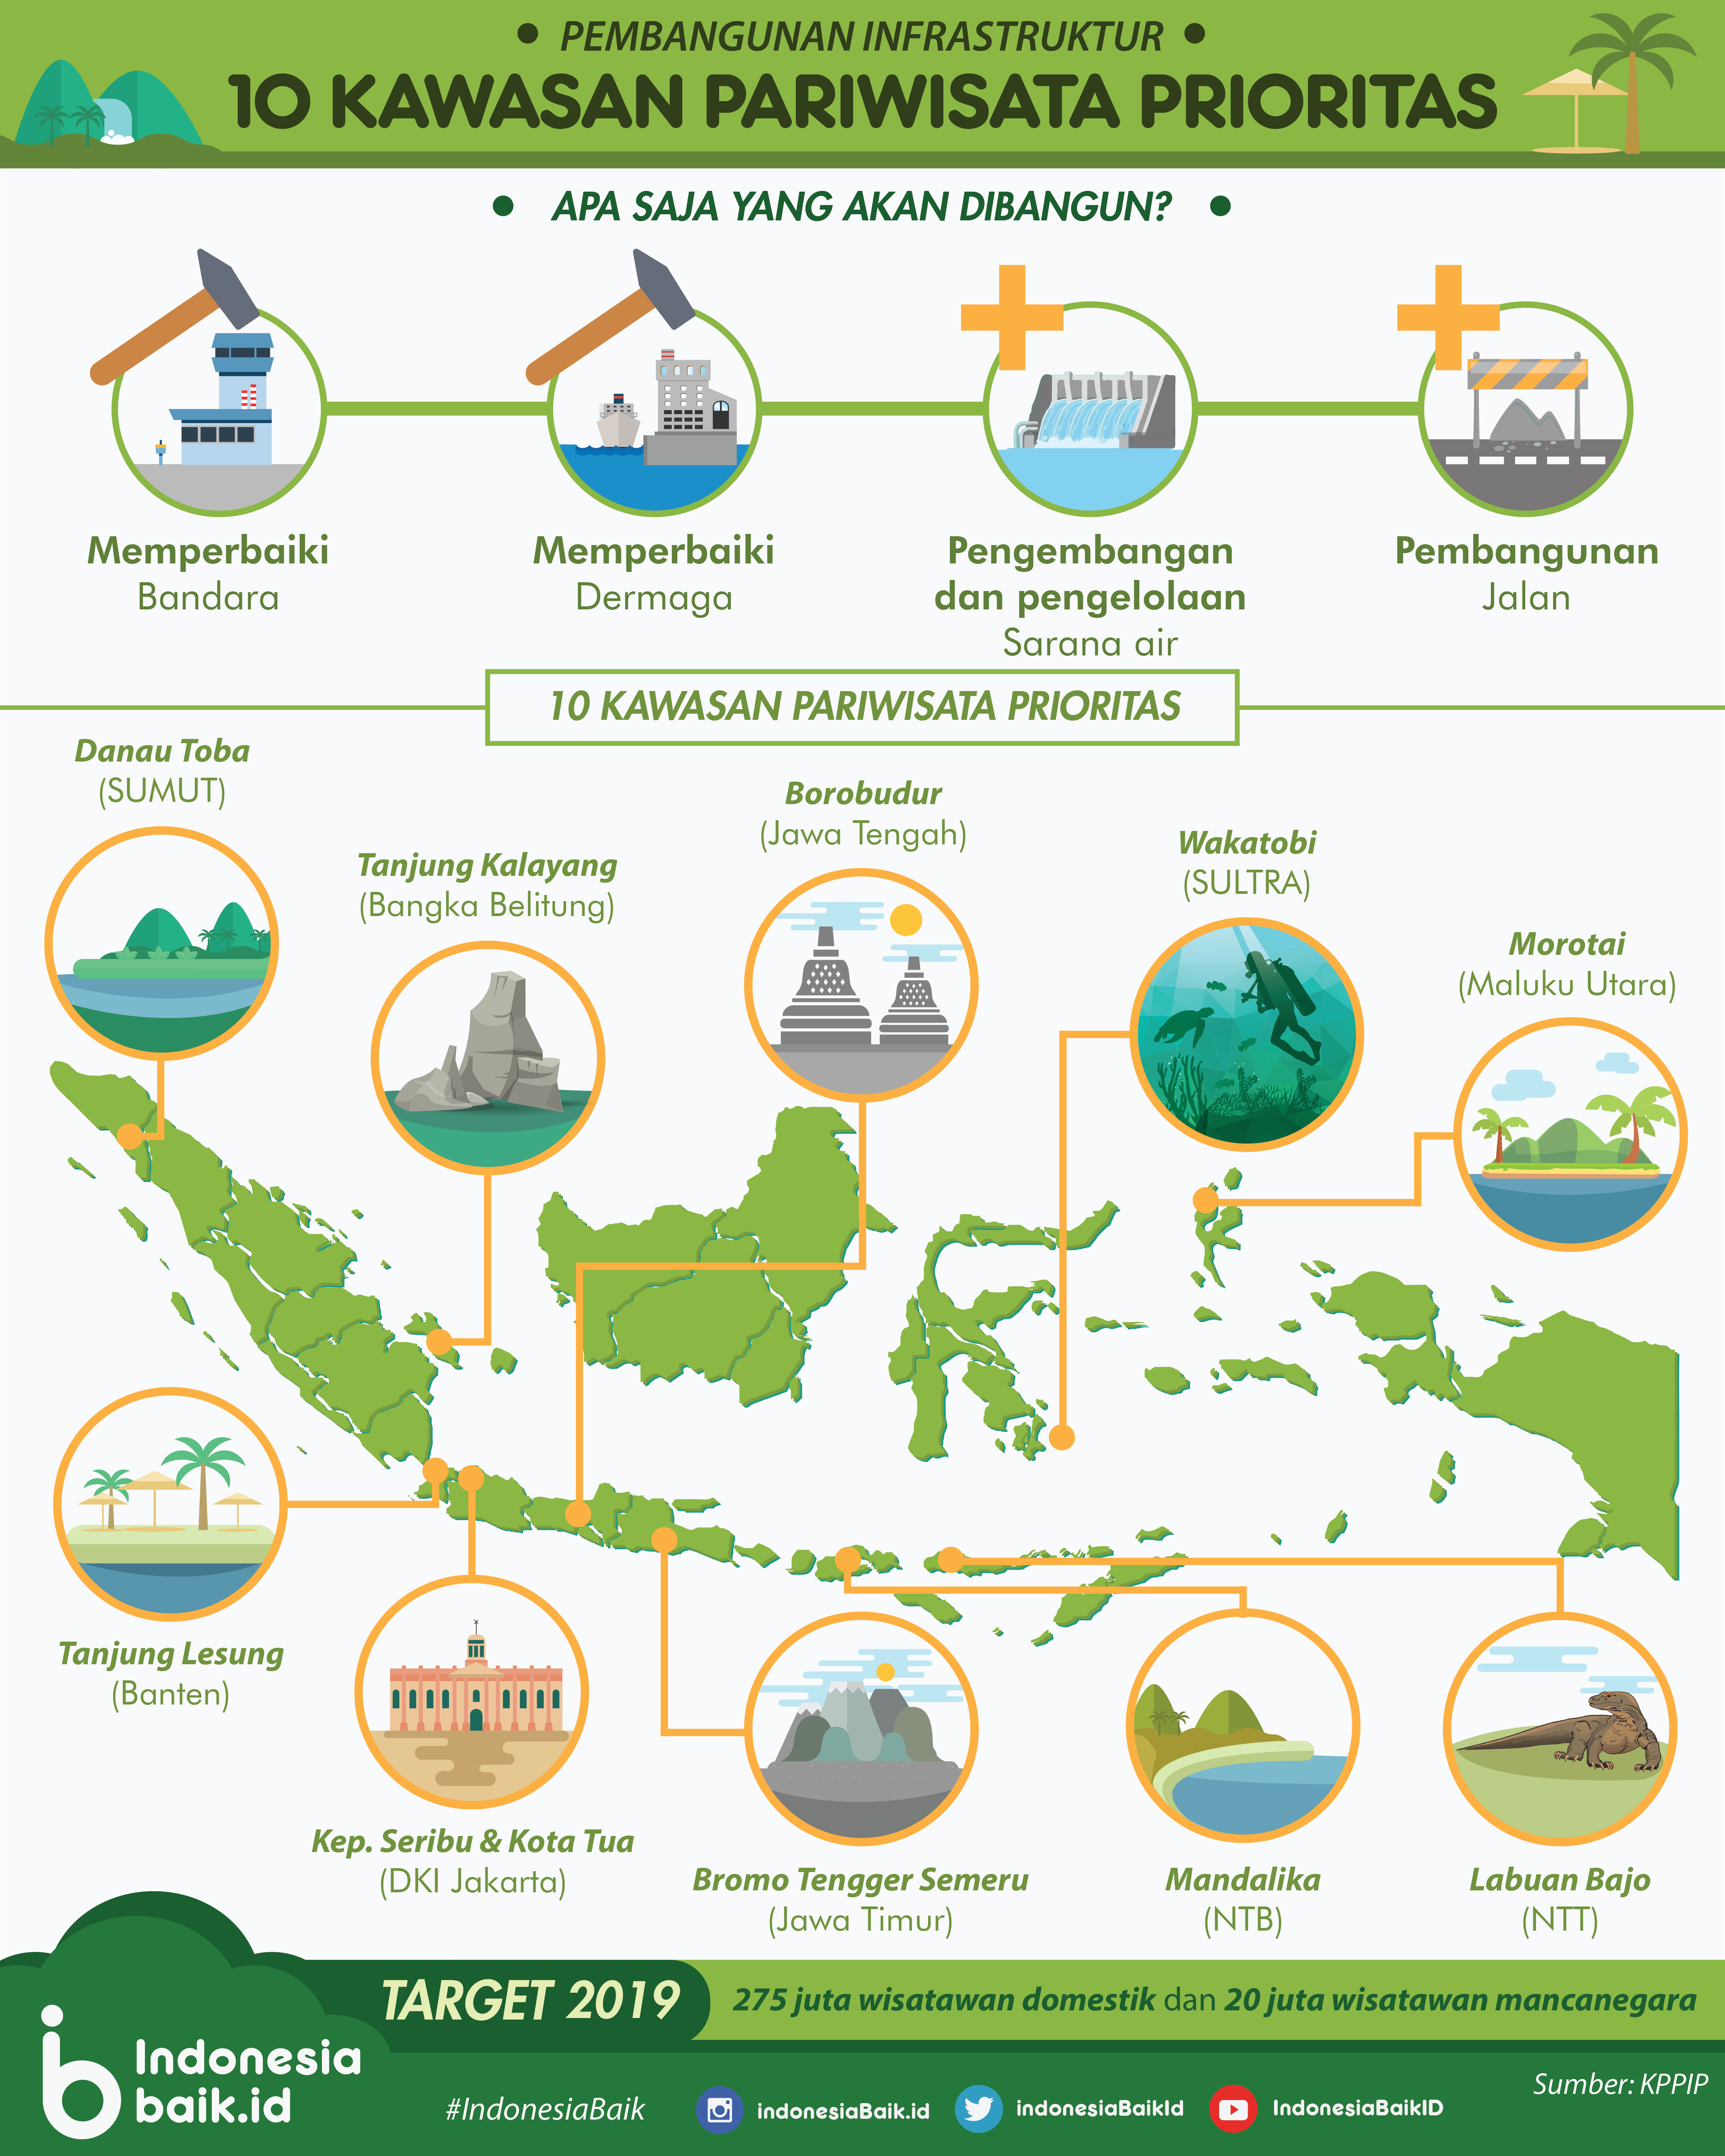 7 Kawasan Pariwisata Prioritas  Indonesia Baik